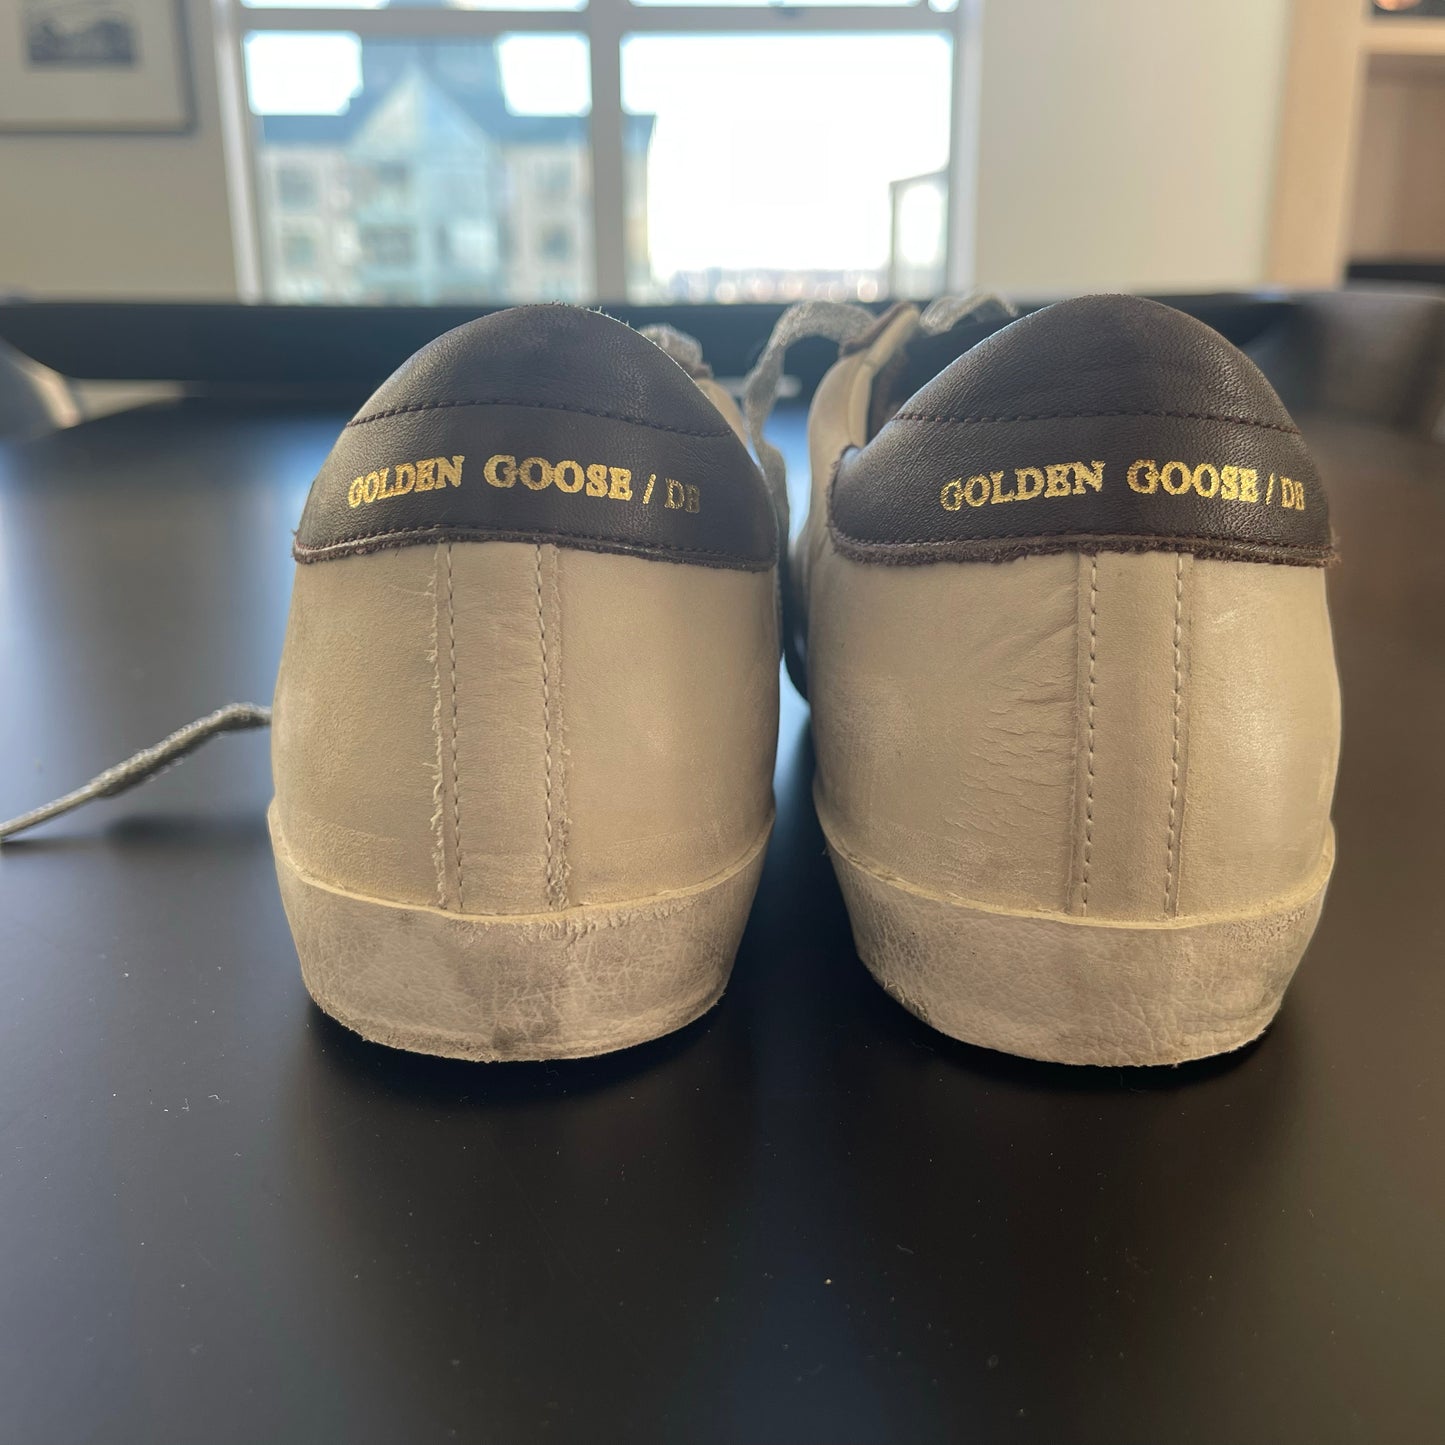 Golden Goose Superstar Sneaker in Brown/Silver, size 41